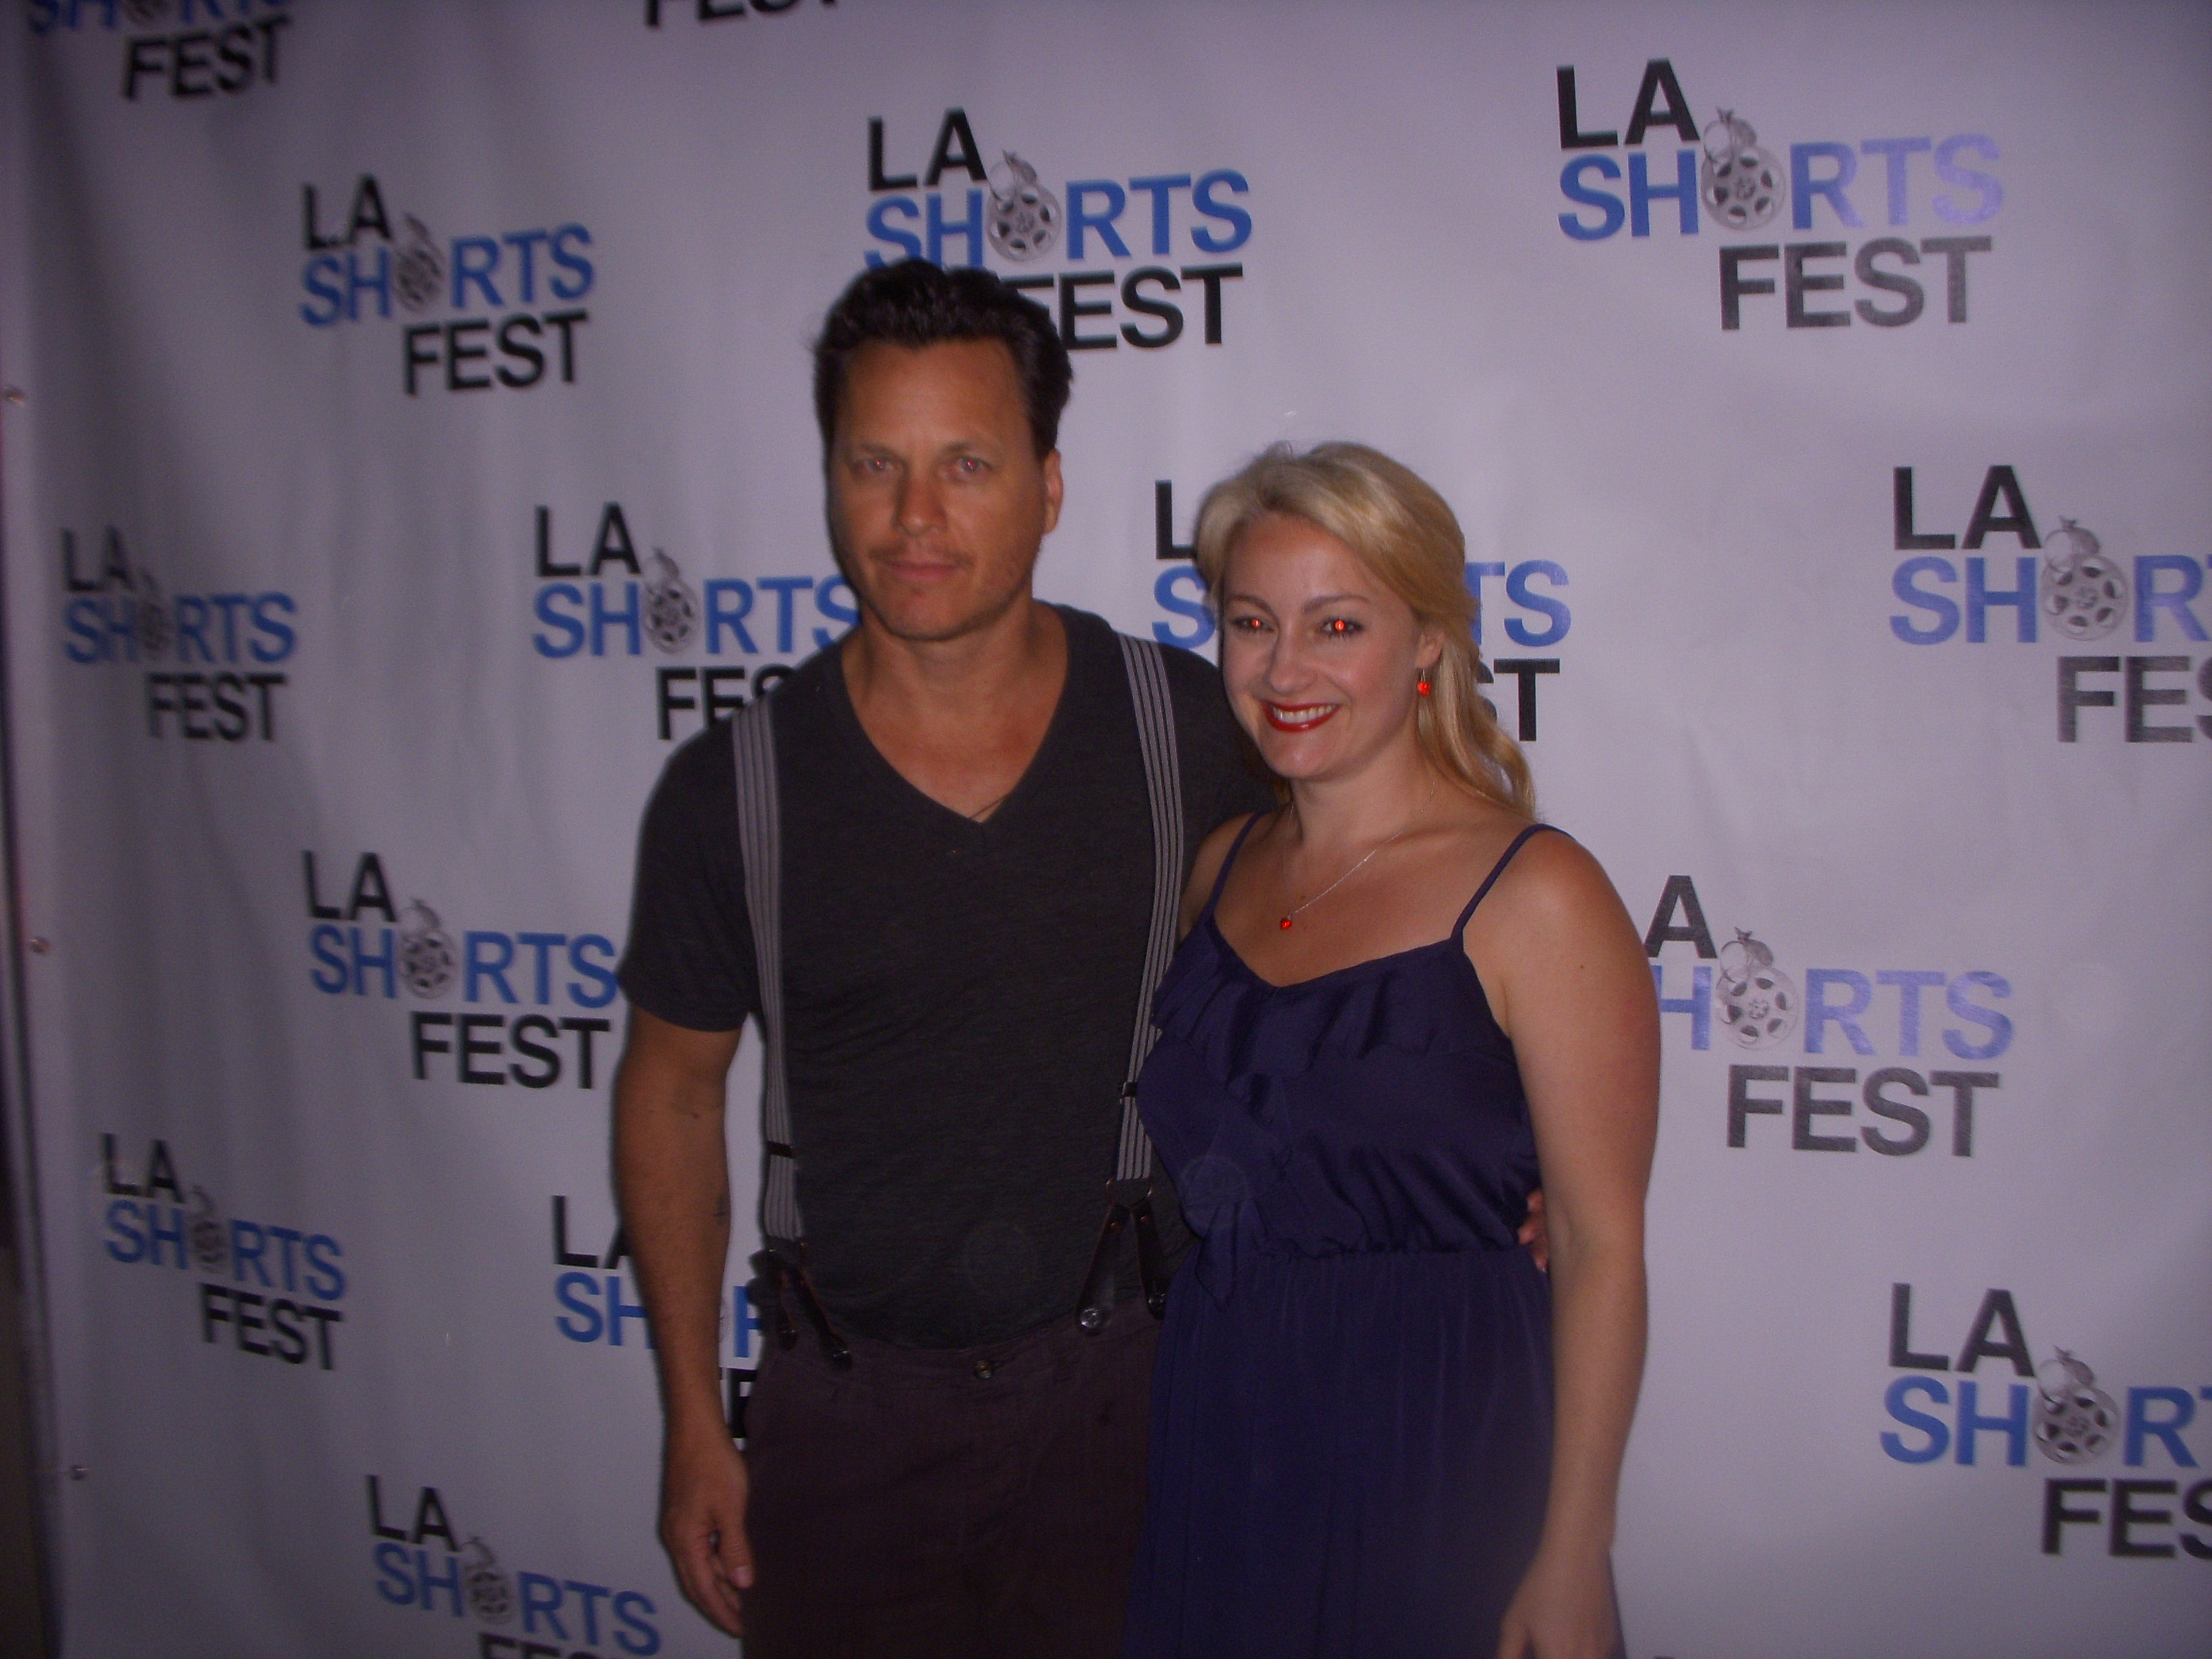 Red Carpet at the LA Shorts Fest, Los Angeles, CA.